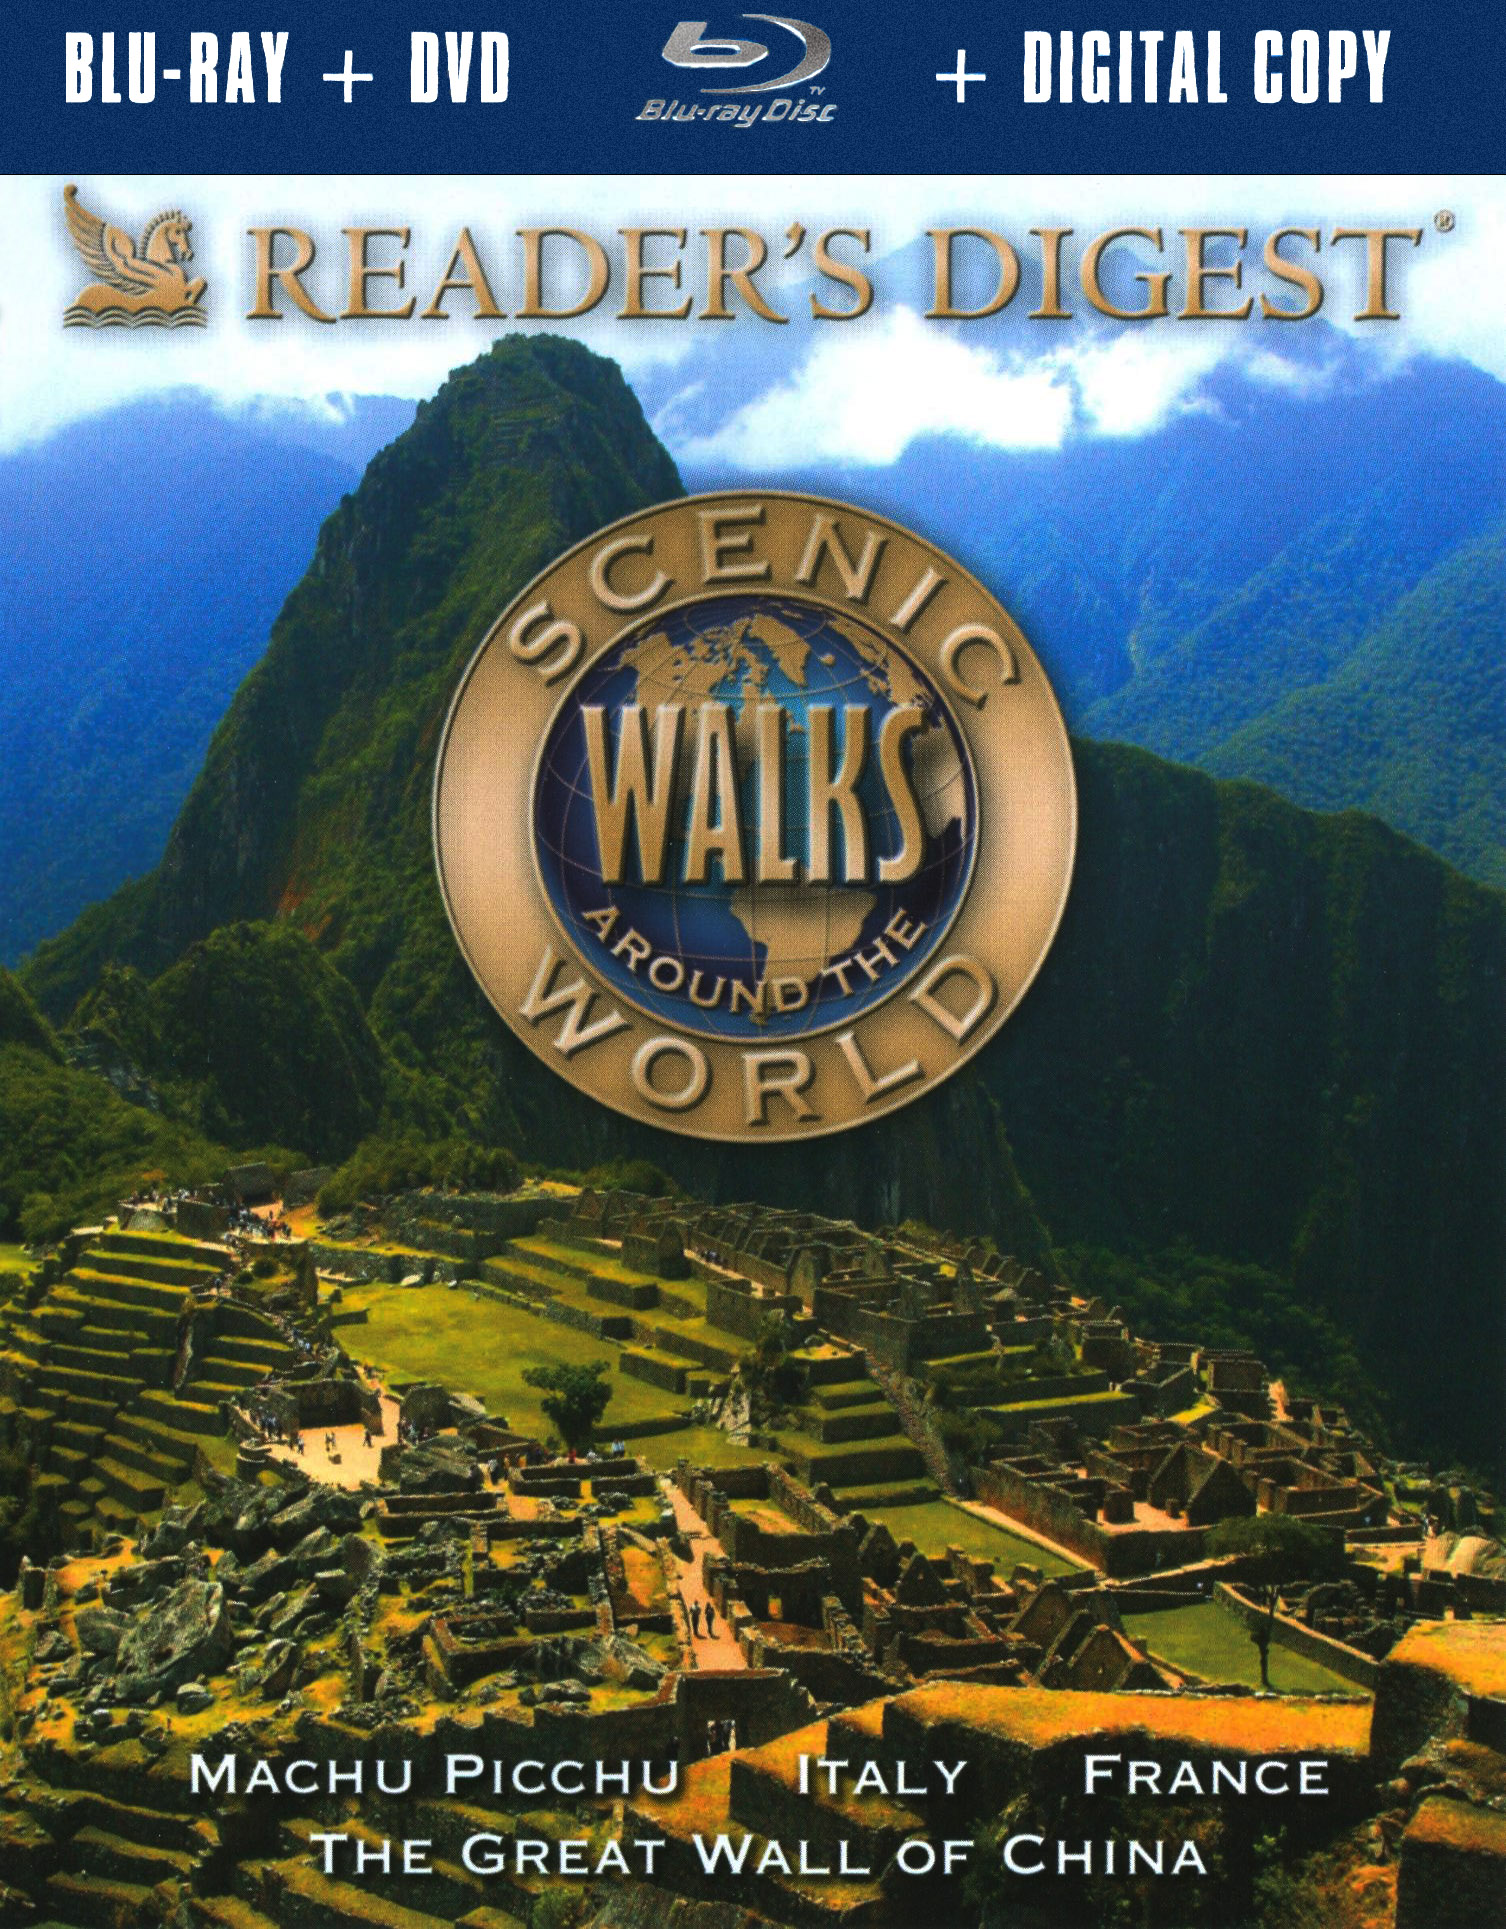 

Scenic Walks Around the World: Historic Pathways [2 Discs] [Includes Digital Copy] [Blu-ray/DVD] [2010]